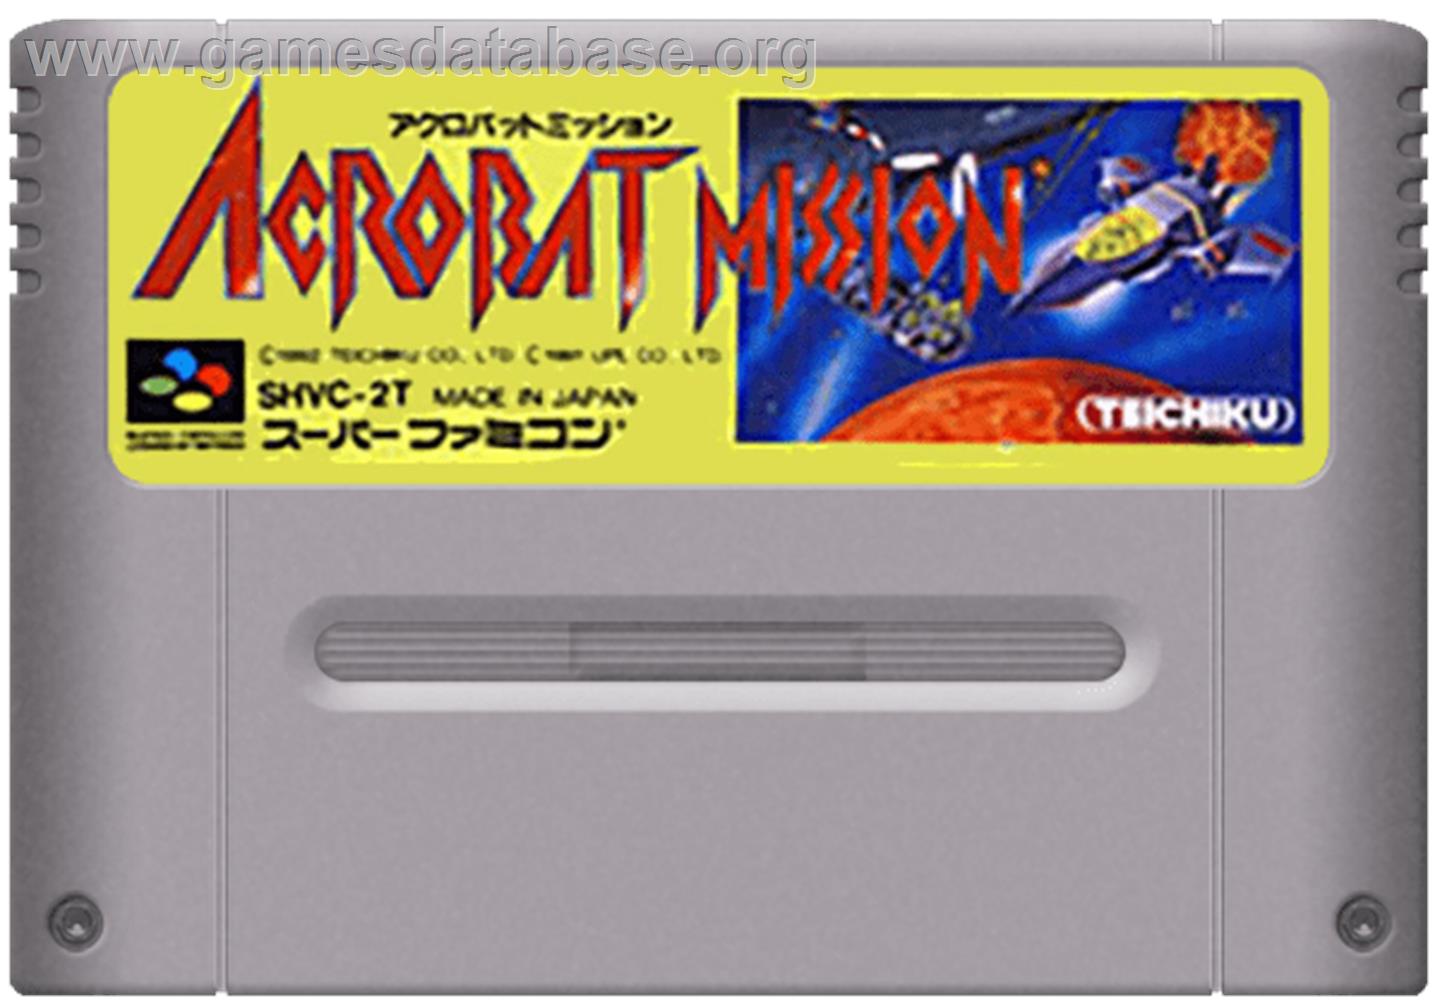 Acrobat Mission - Nintendo SNES - Artwork - Cartridge